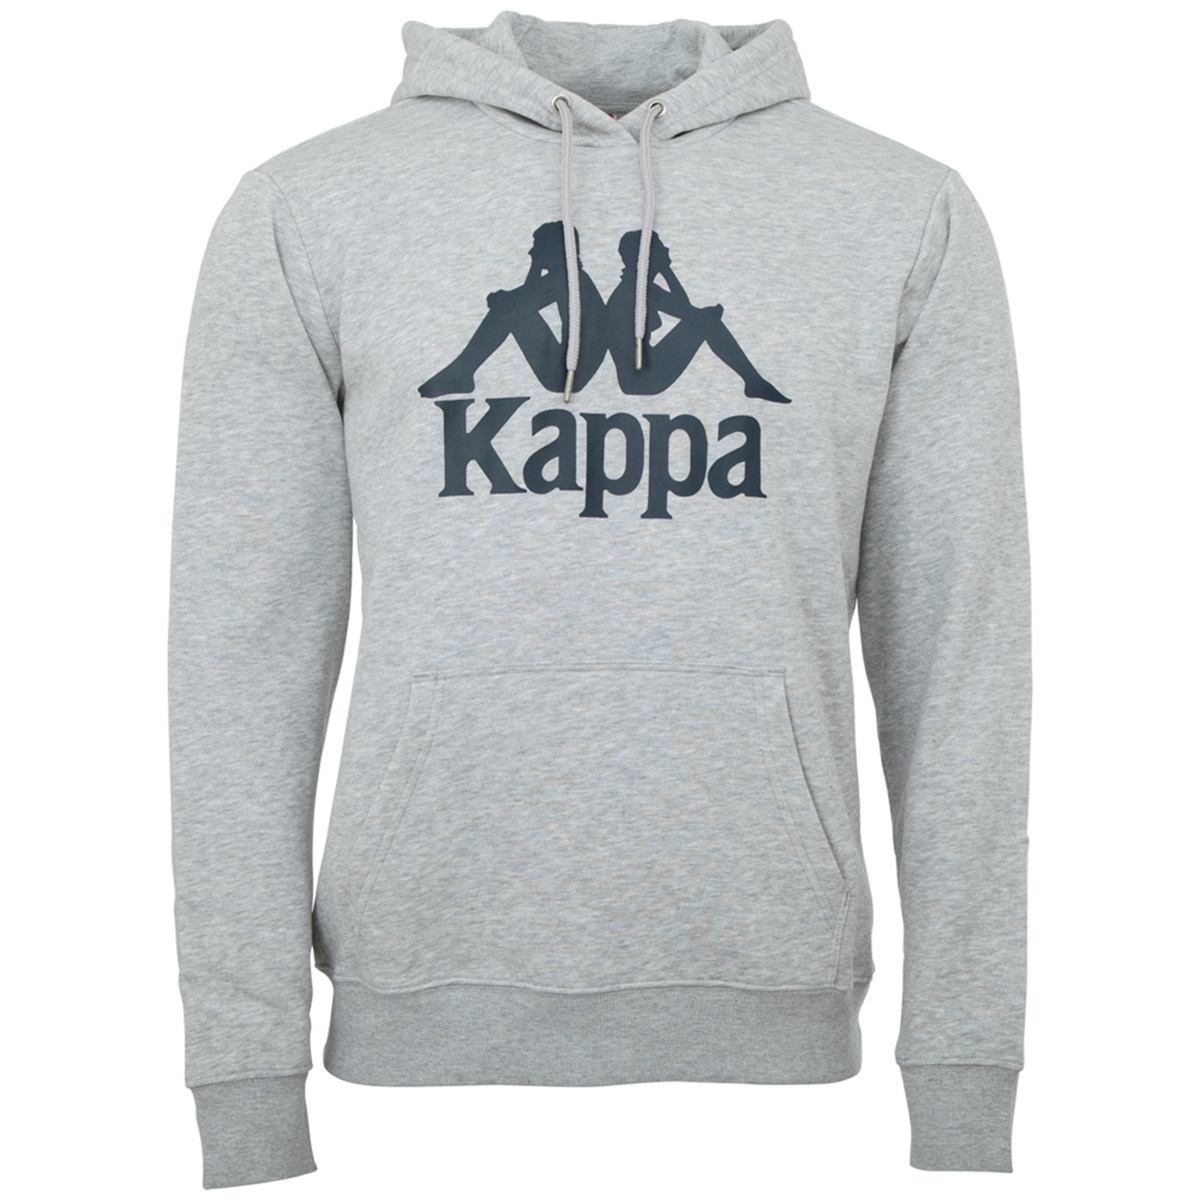 Kappa Unisex Hooded Sweatshirt grey 705322 18M von Kappa